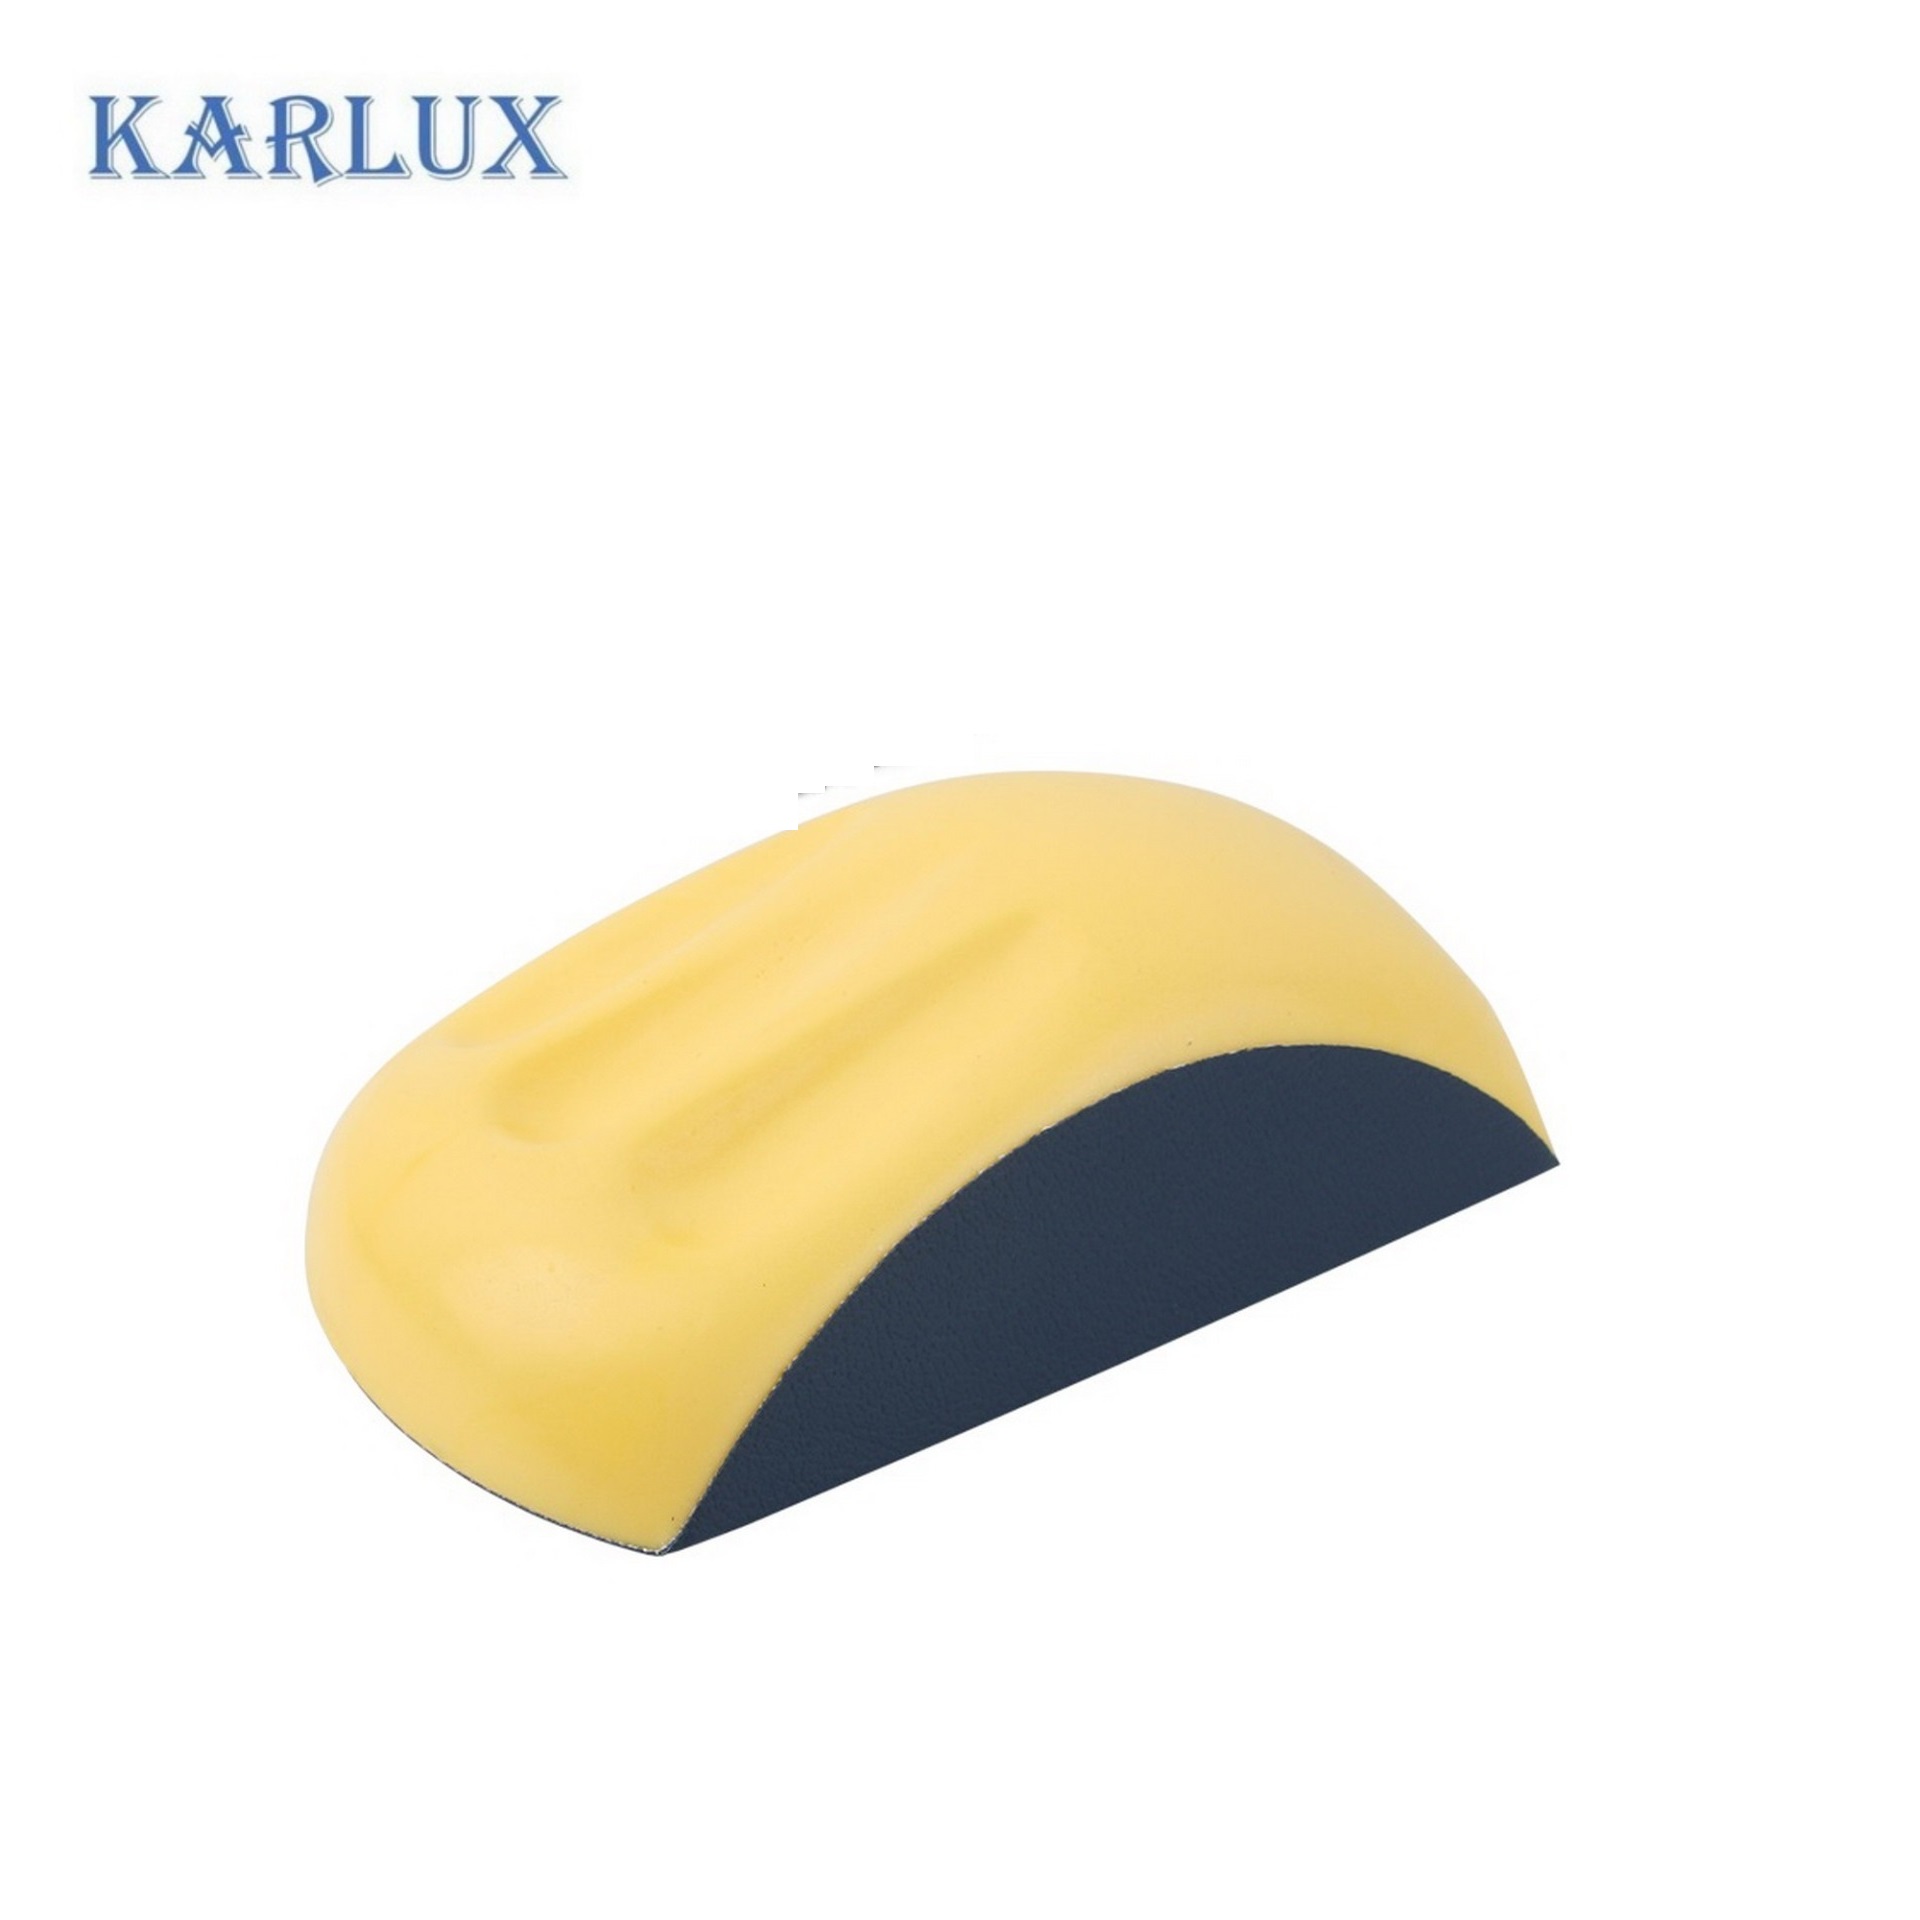 Karlux บล็อคมือ 1ชิ้น รองขัดกระดาษทรายกลมแบบกาว ขนาด 6นิ้ว Inch Hand Sanding Block for Round Discs